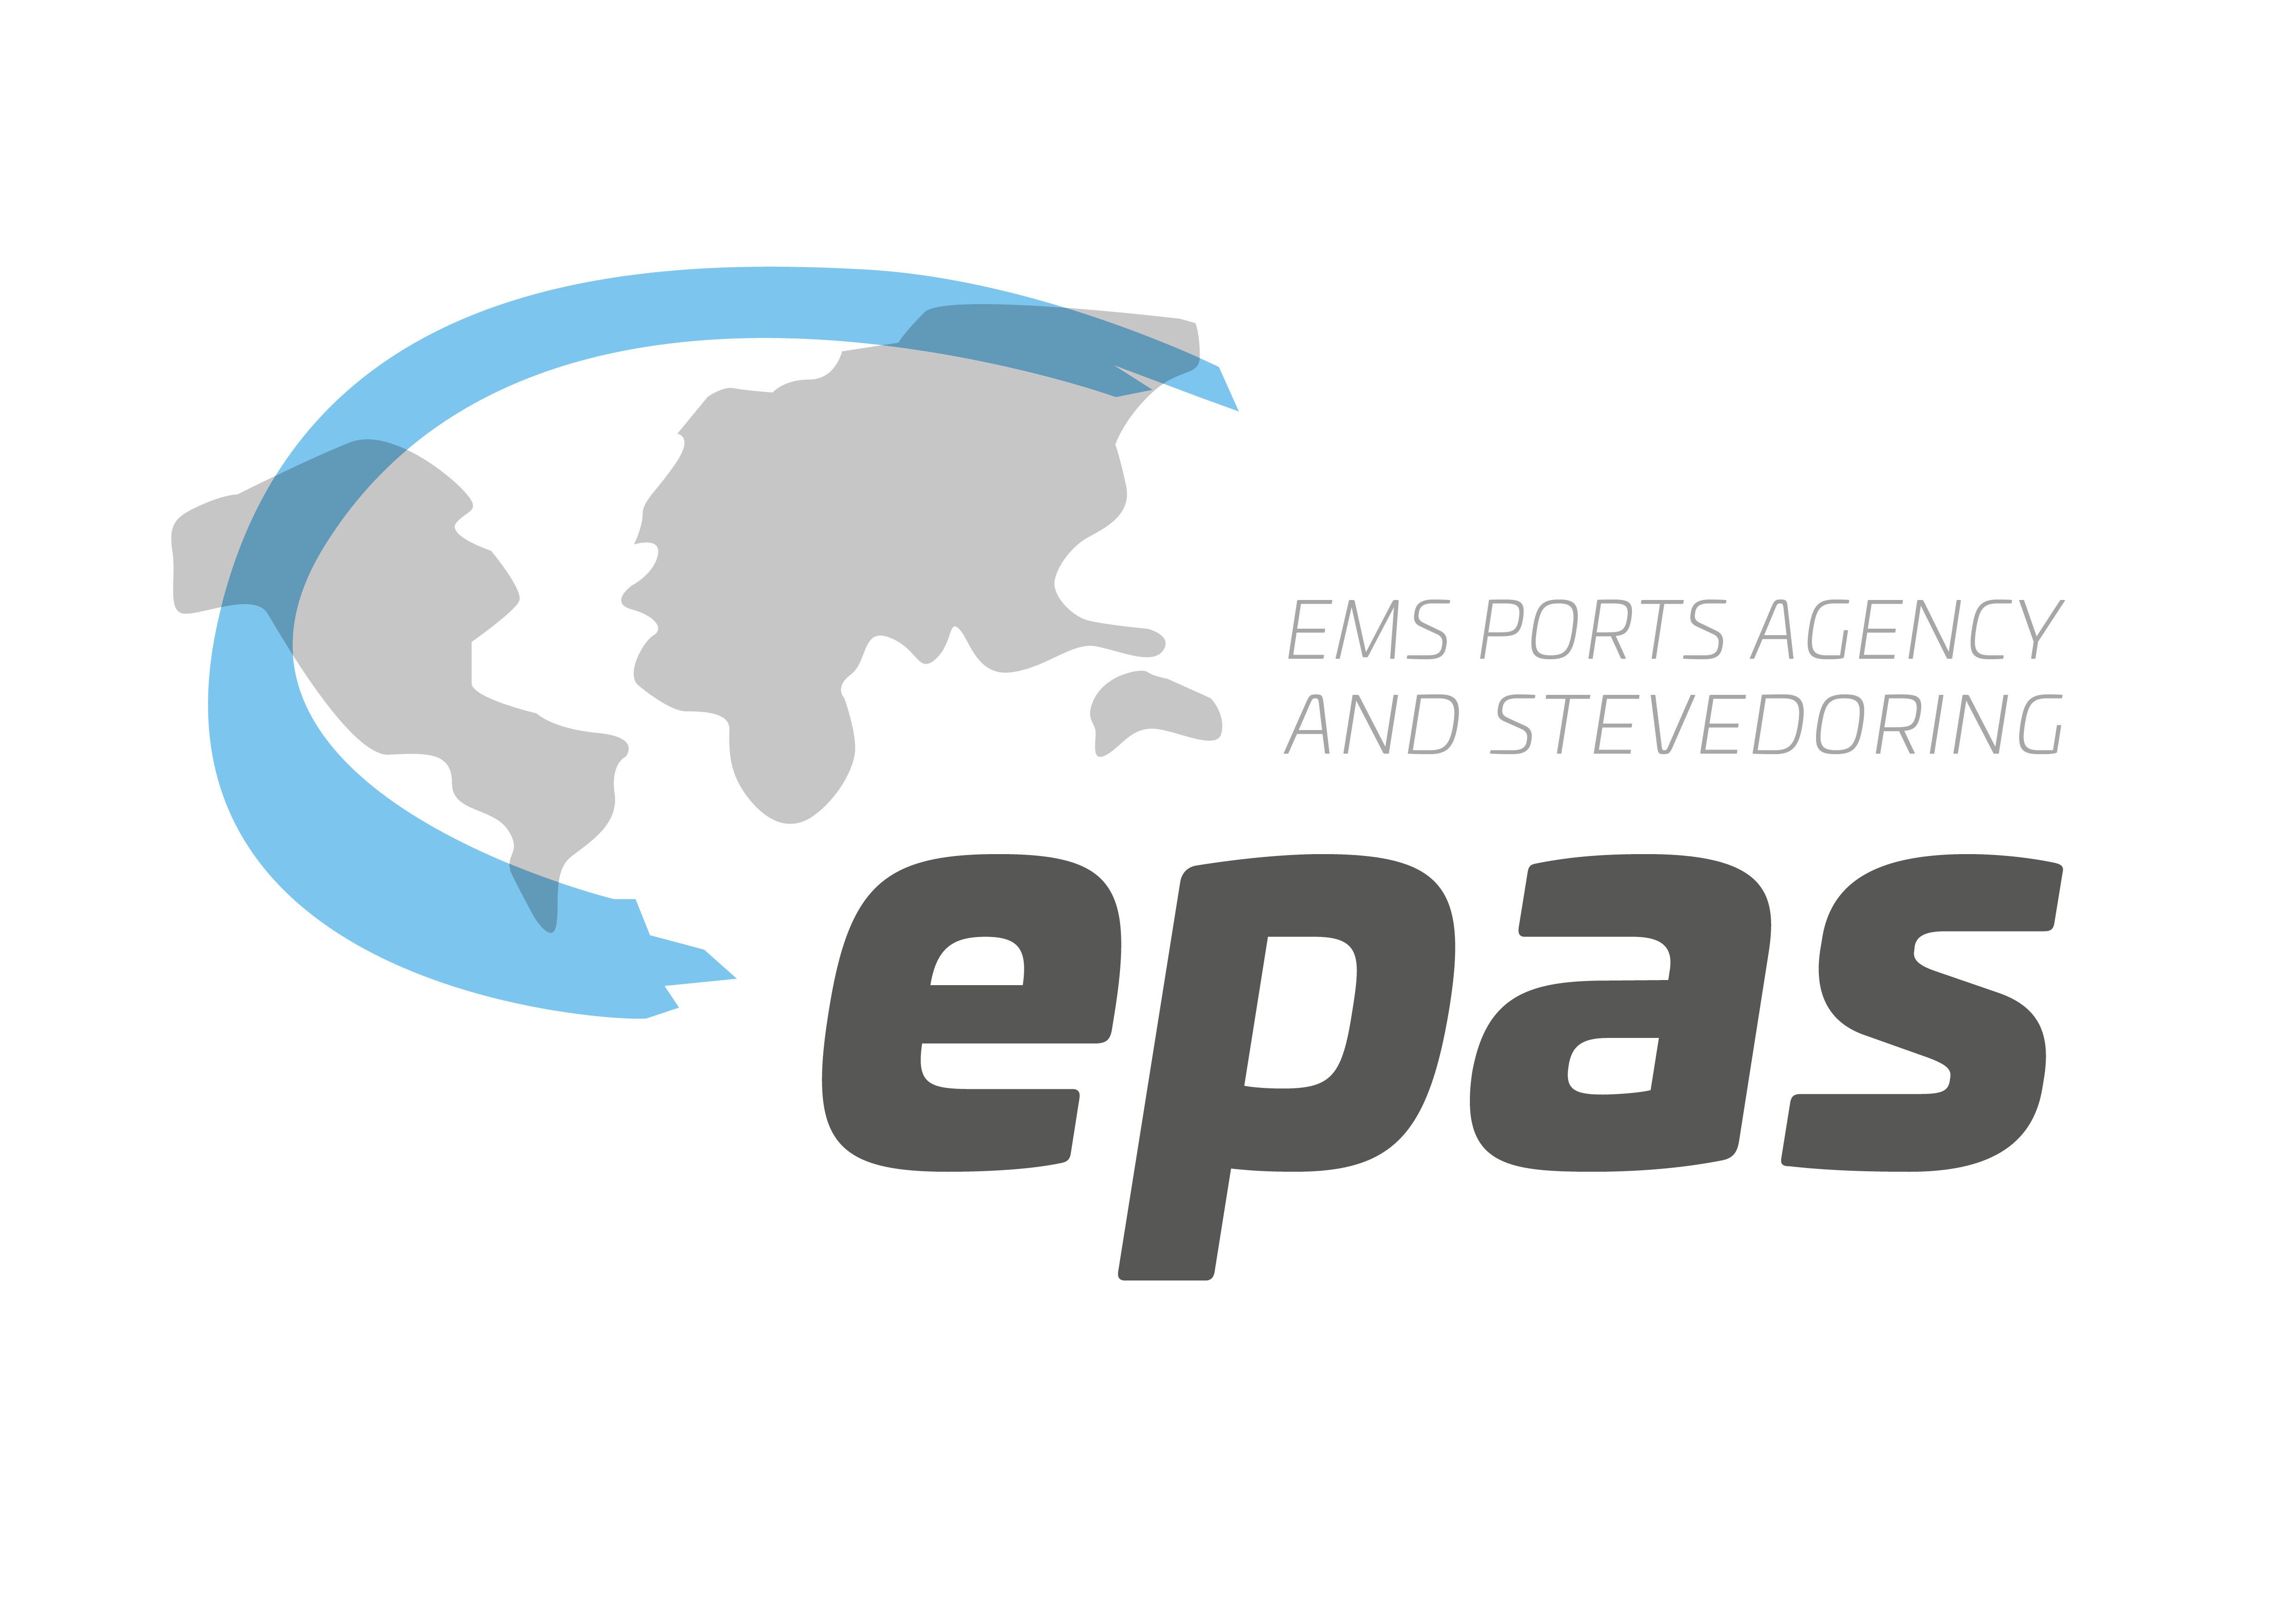 epas Ems Ports Agency and Stevedoring